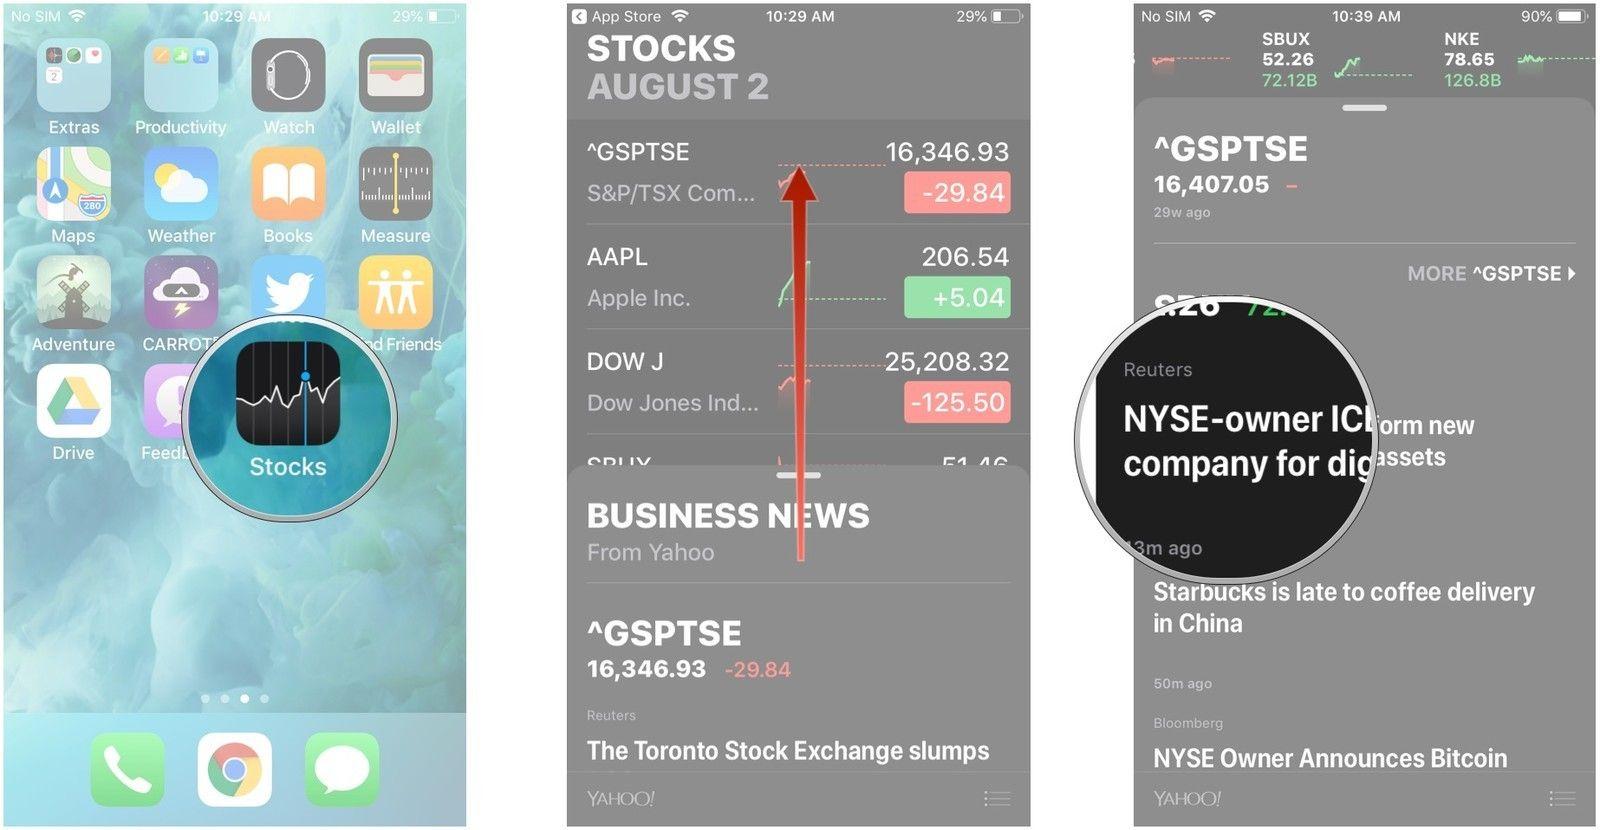 Stocks App Logo - Stocks App: The ultimate guide | iMore